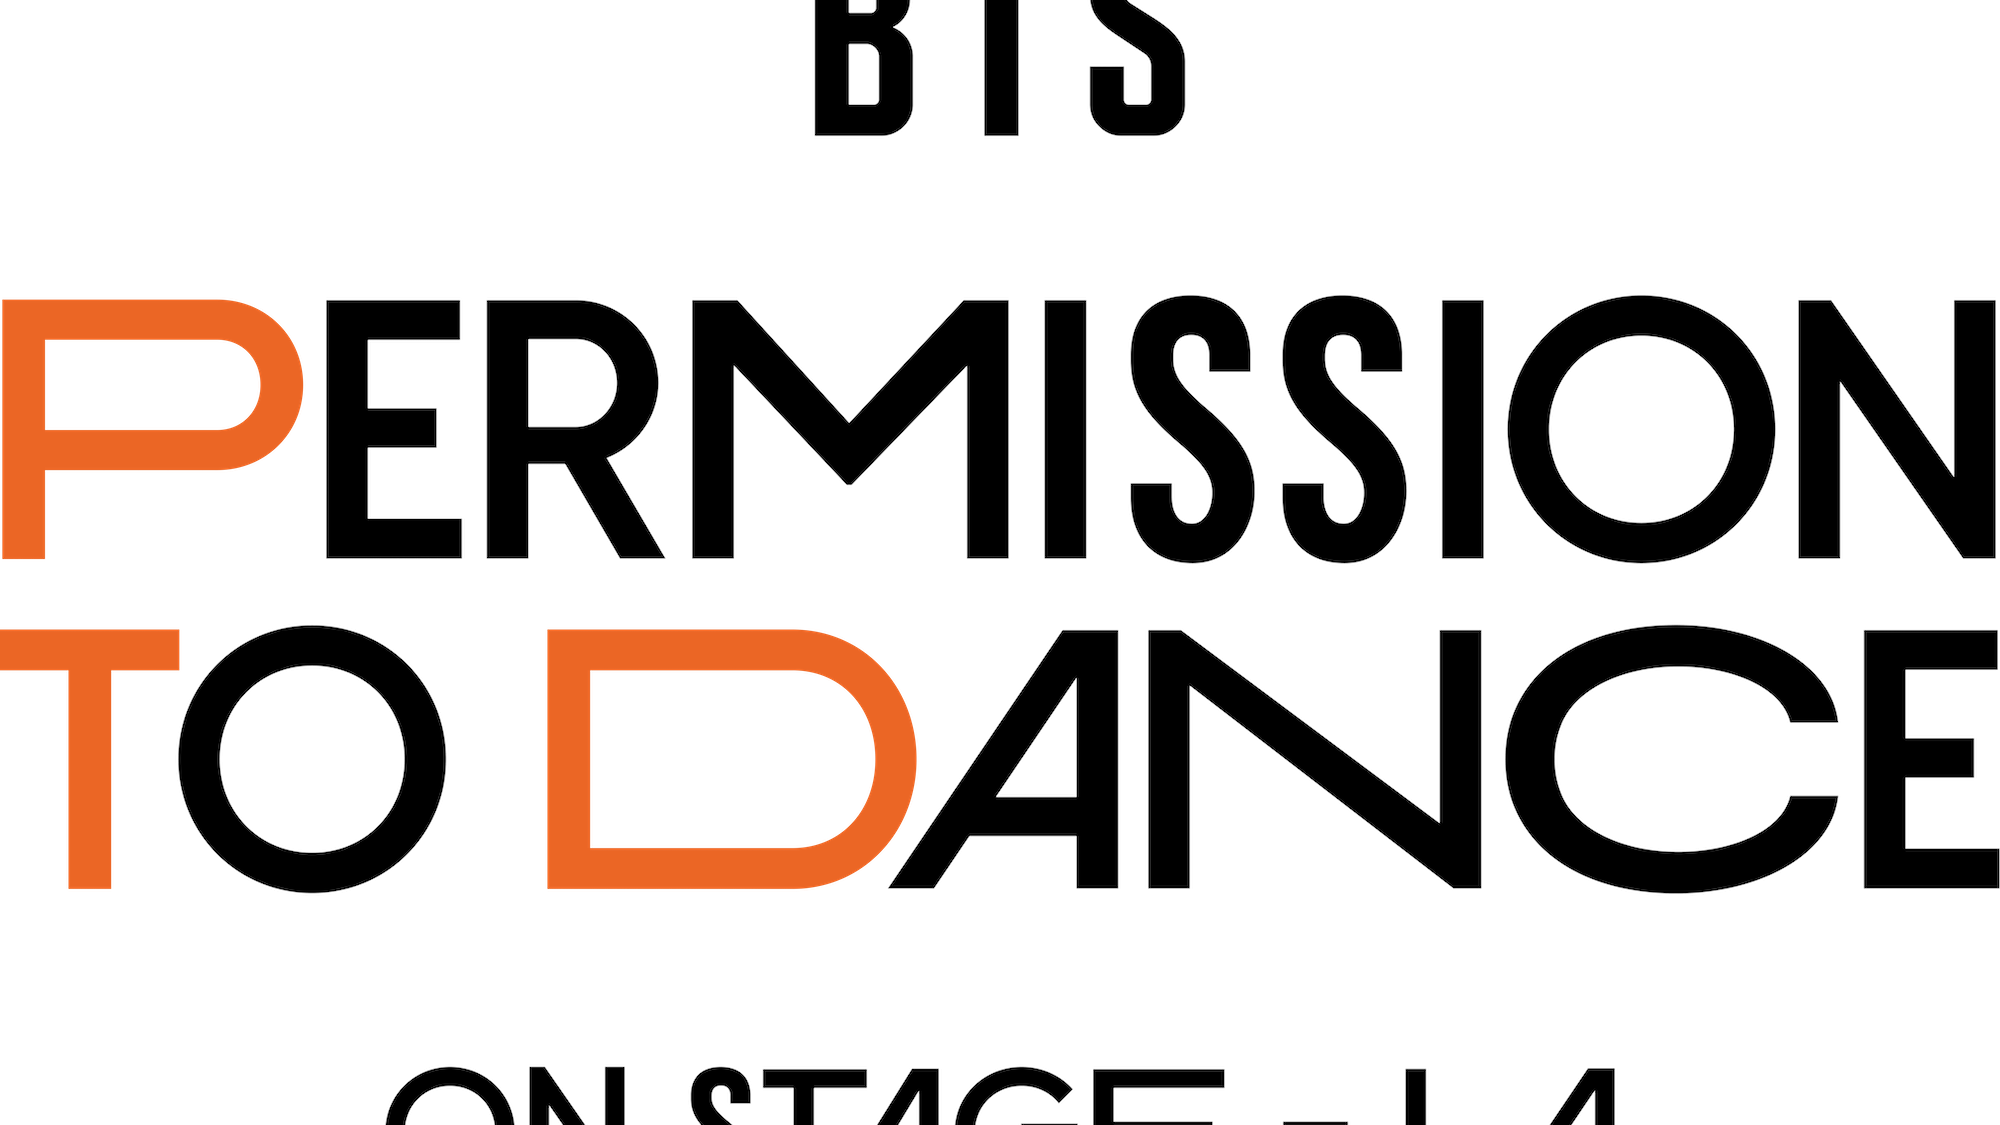 BTS: PERMISSION TO DANCE ON STAGE – LA Logo